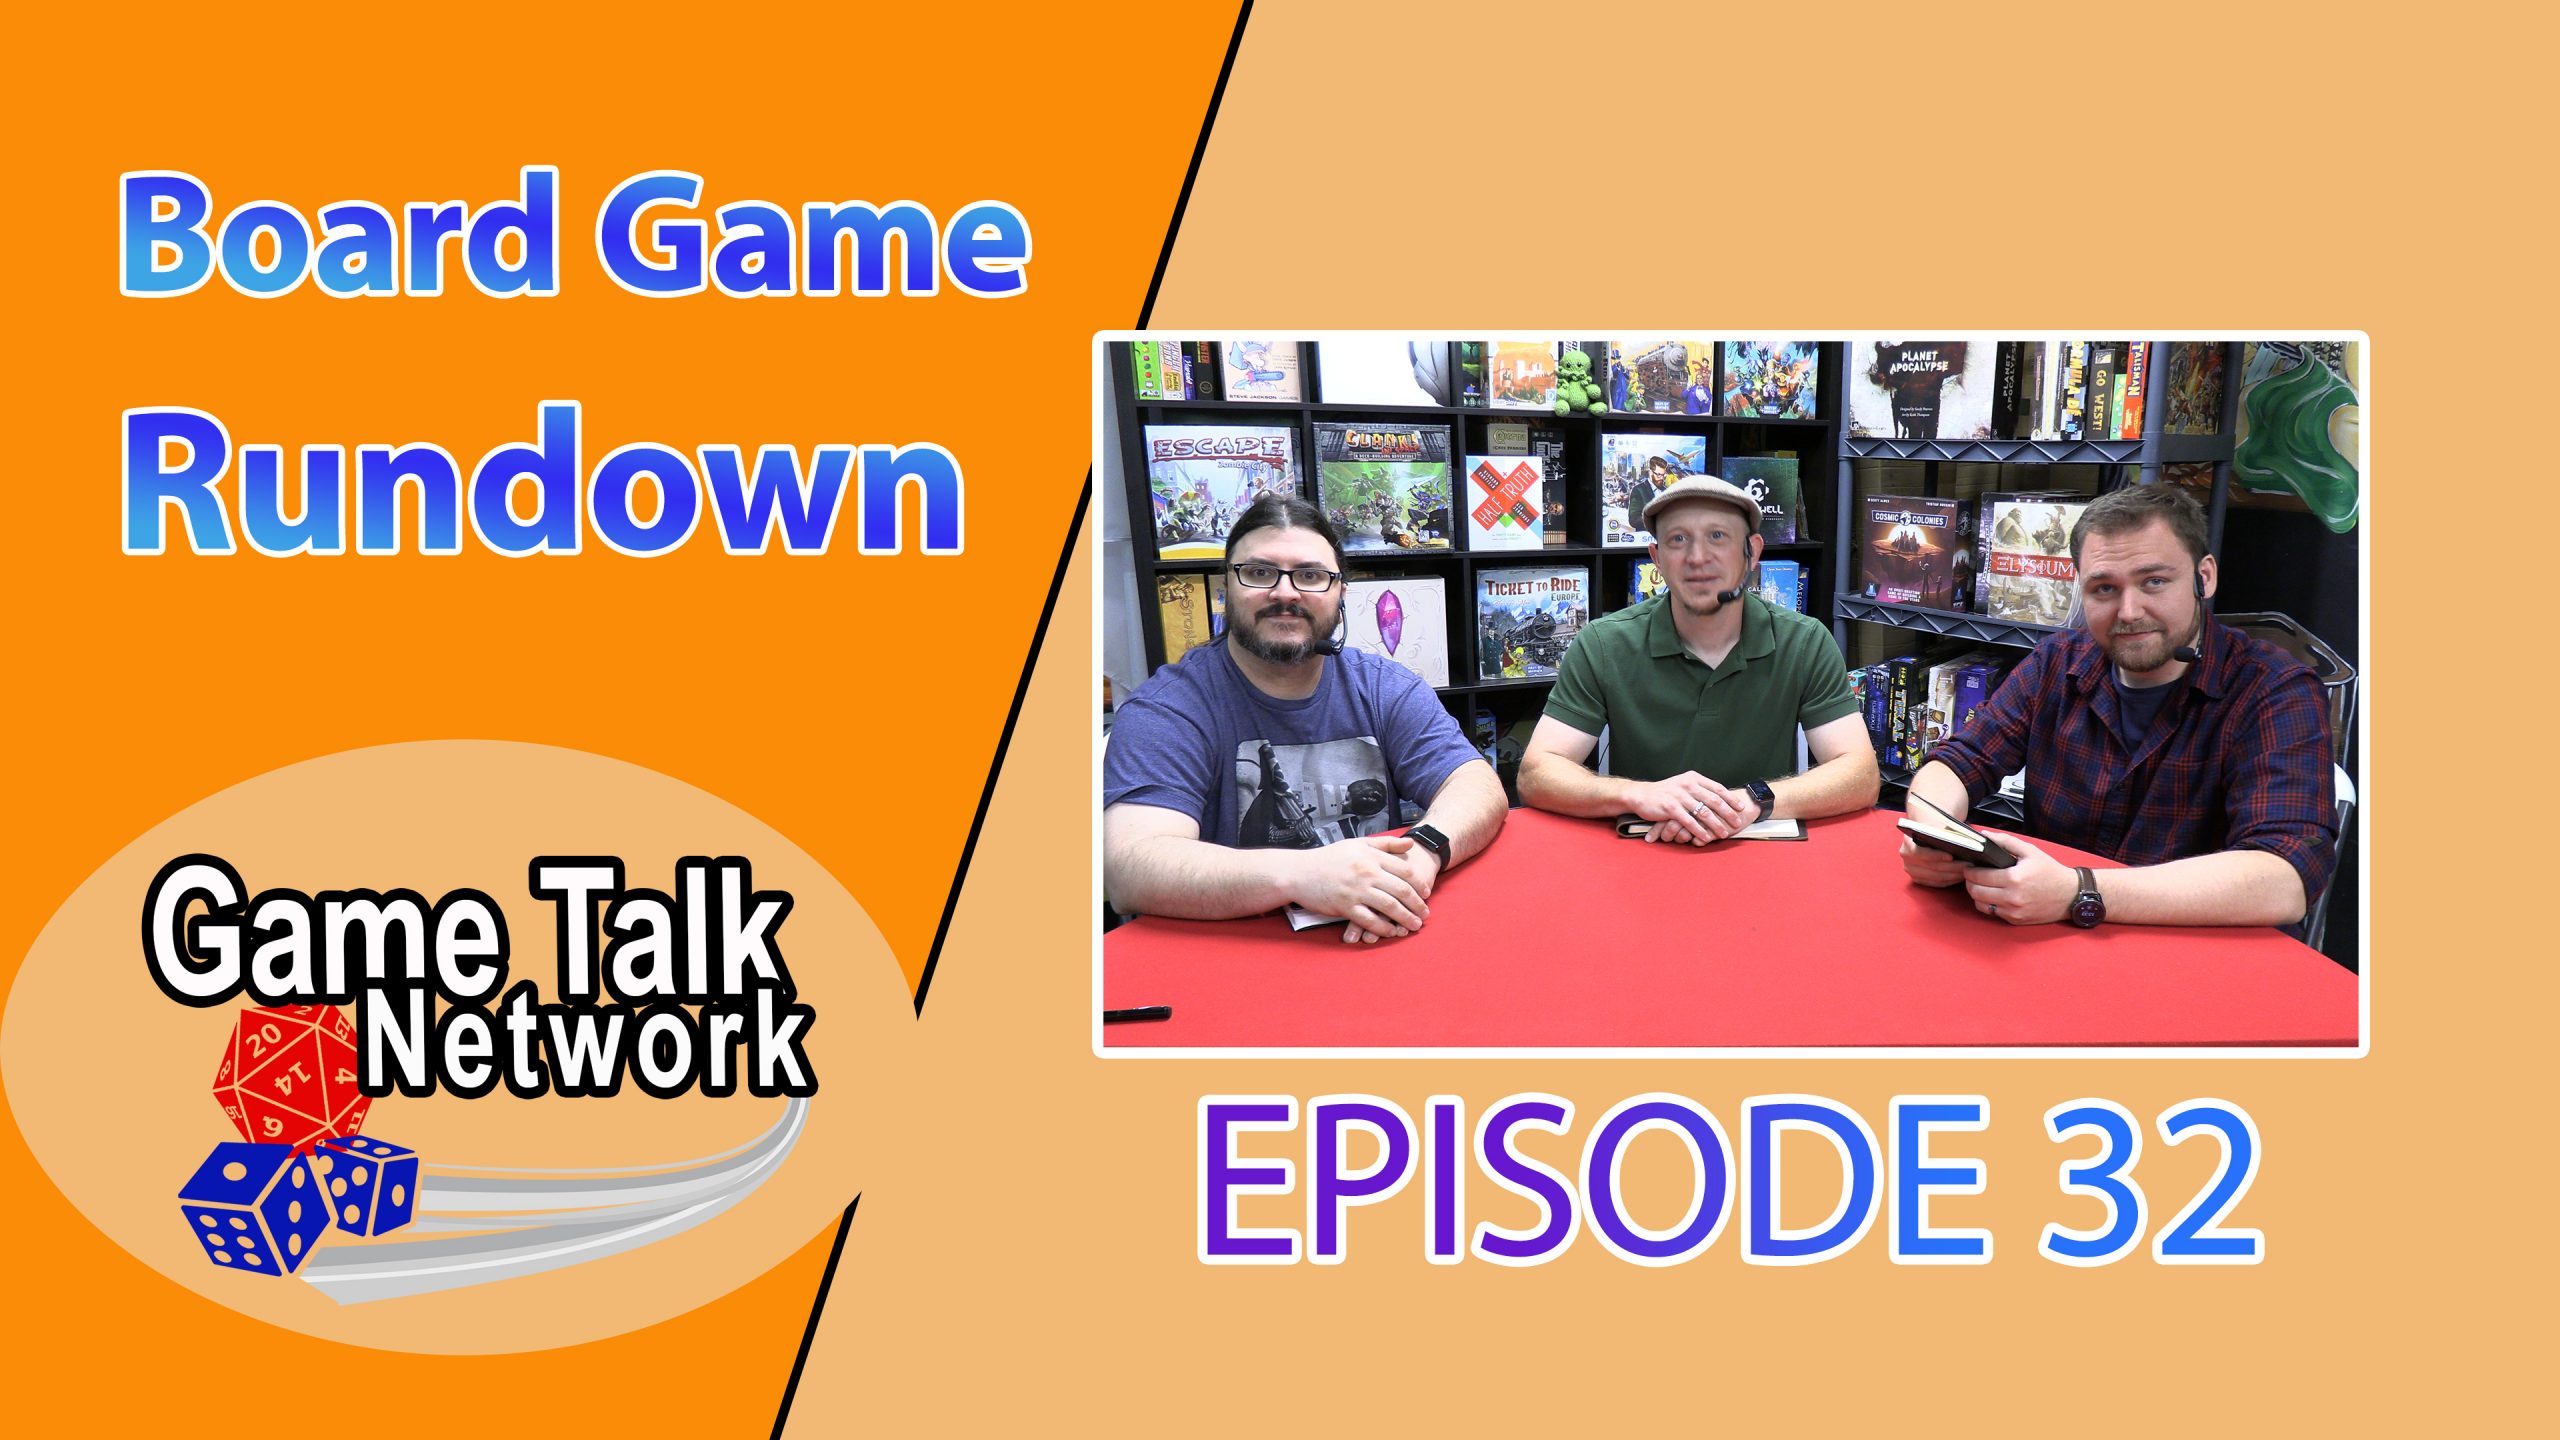 Board Game Rundown Episode 32: Board Game pet Peeves